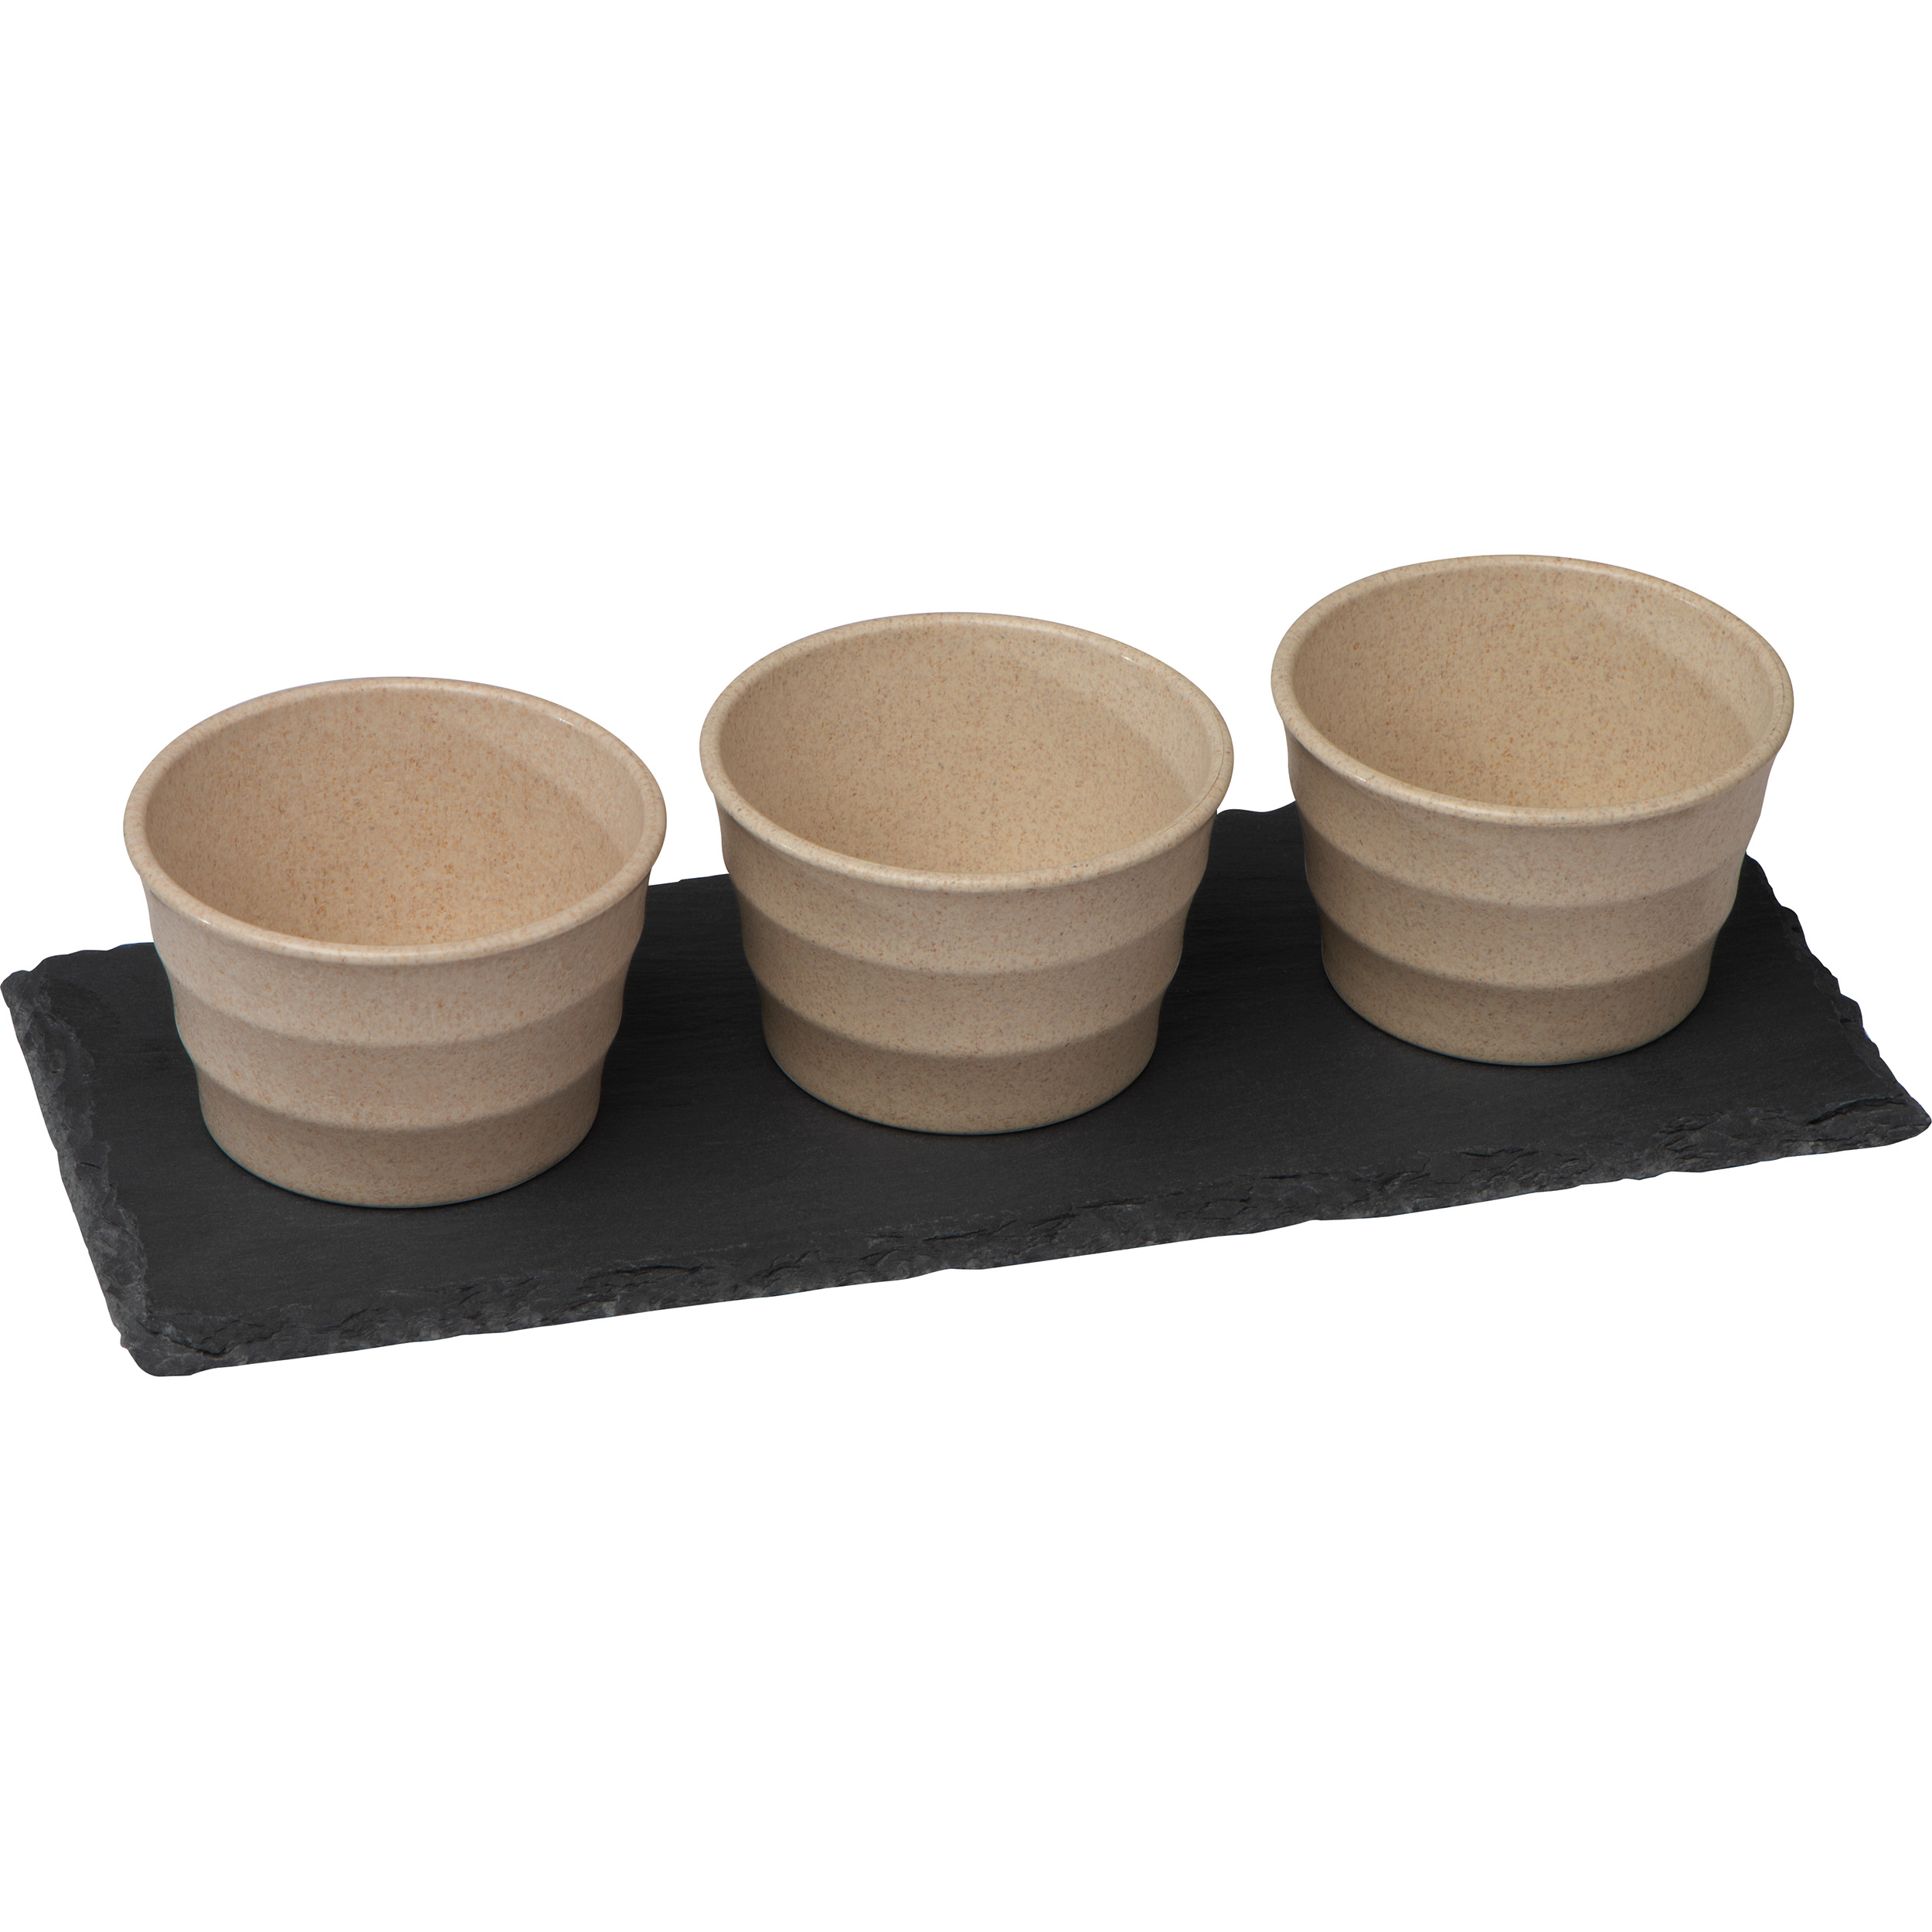 Customized Serving Bowl Set - Tewkesbury